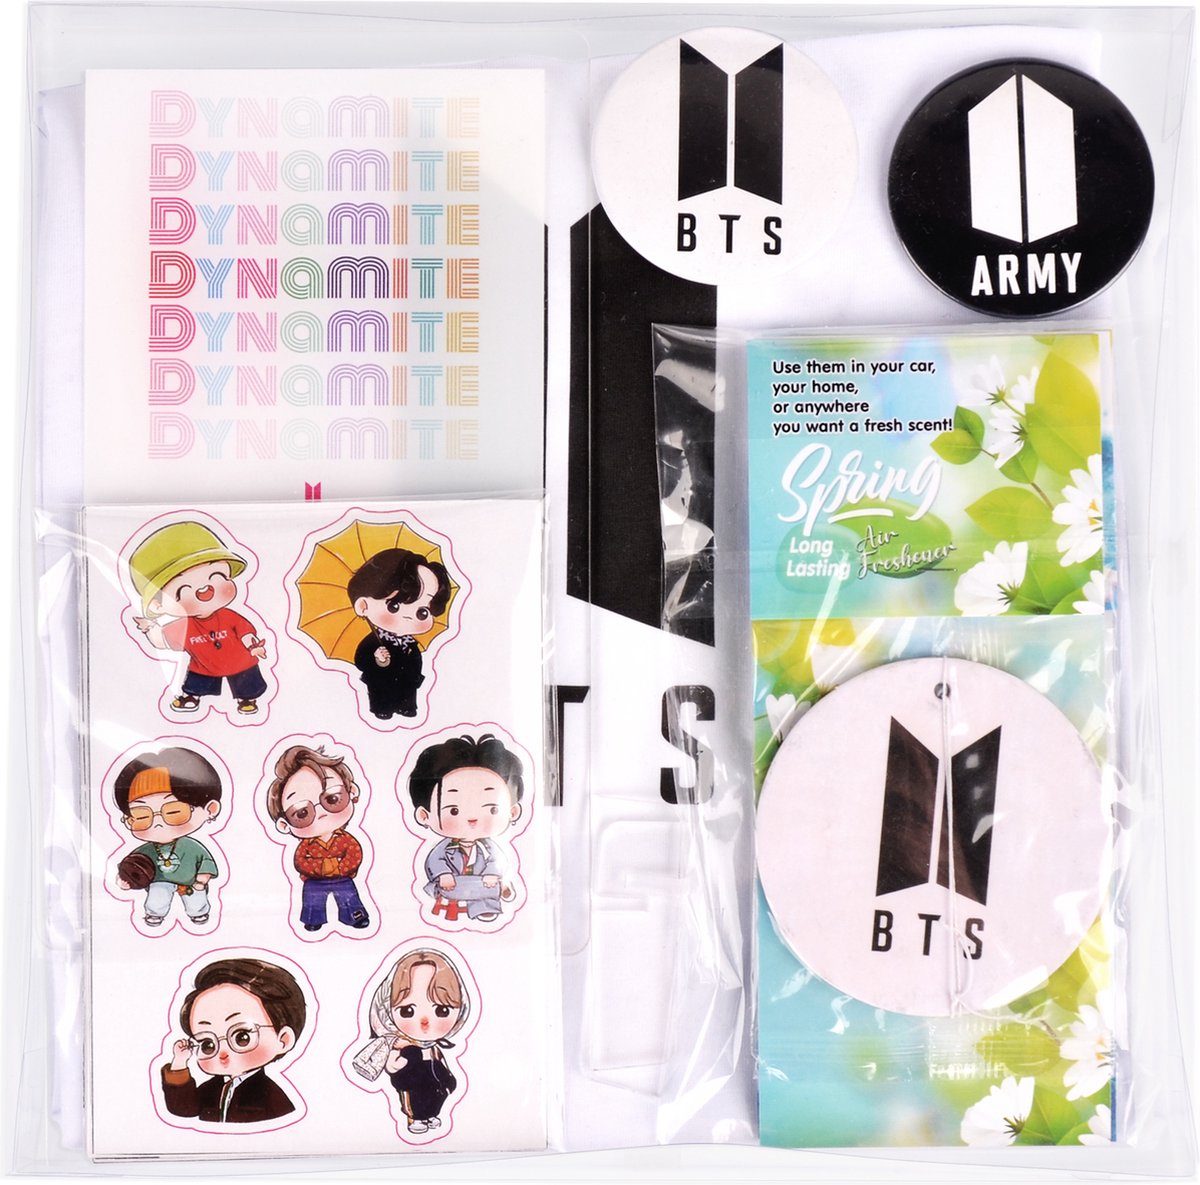 BTS Gift Set (L) - Spotify Song Sign - Tshirt - Stickers - Car Air Freshener - BTS ARMY Merch - Birthday - KPOP Album Merchandise Gift